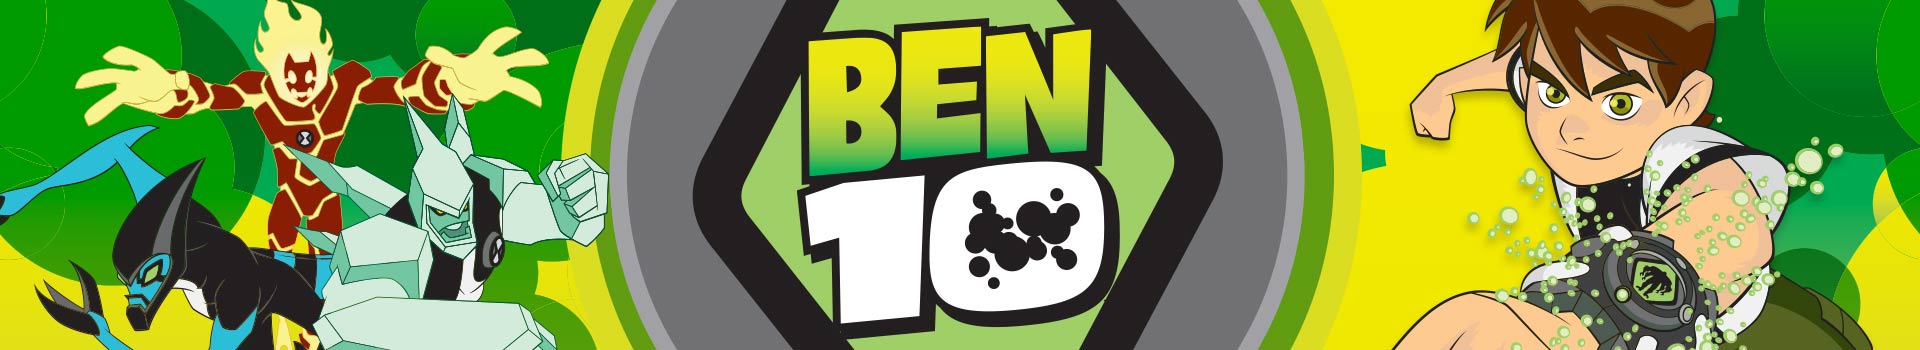 Ben 10 - Official Merchandise